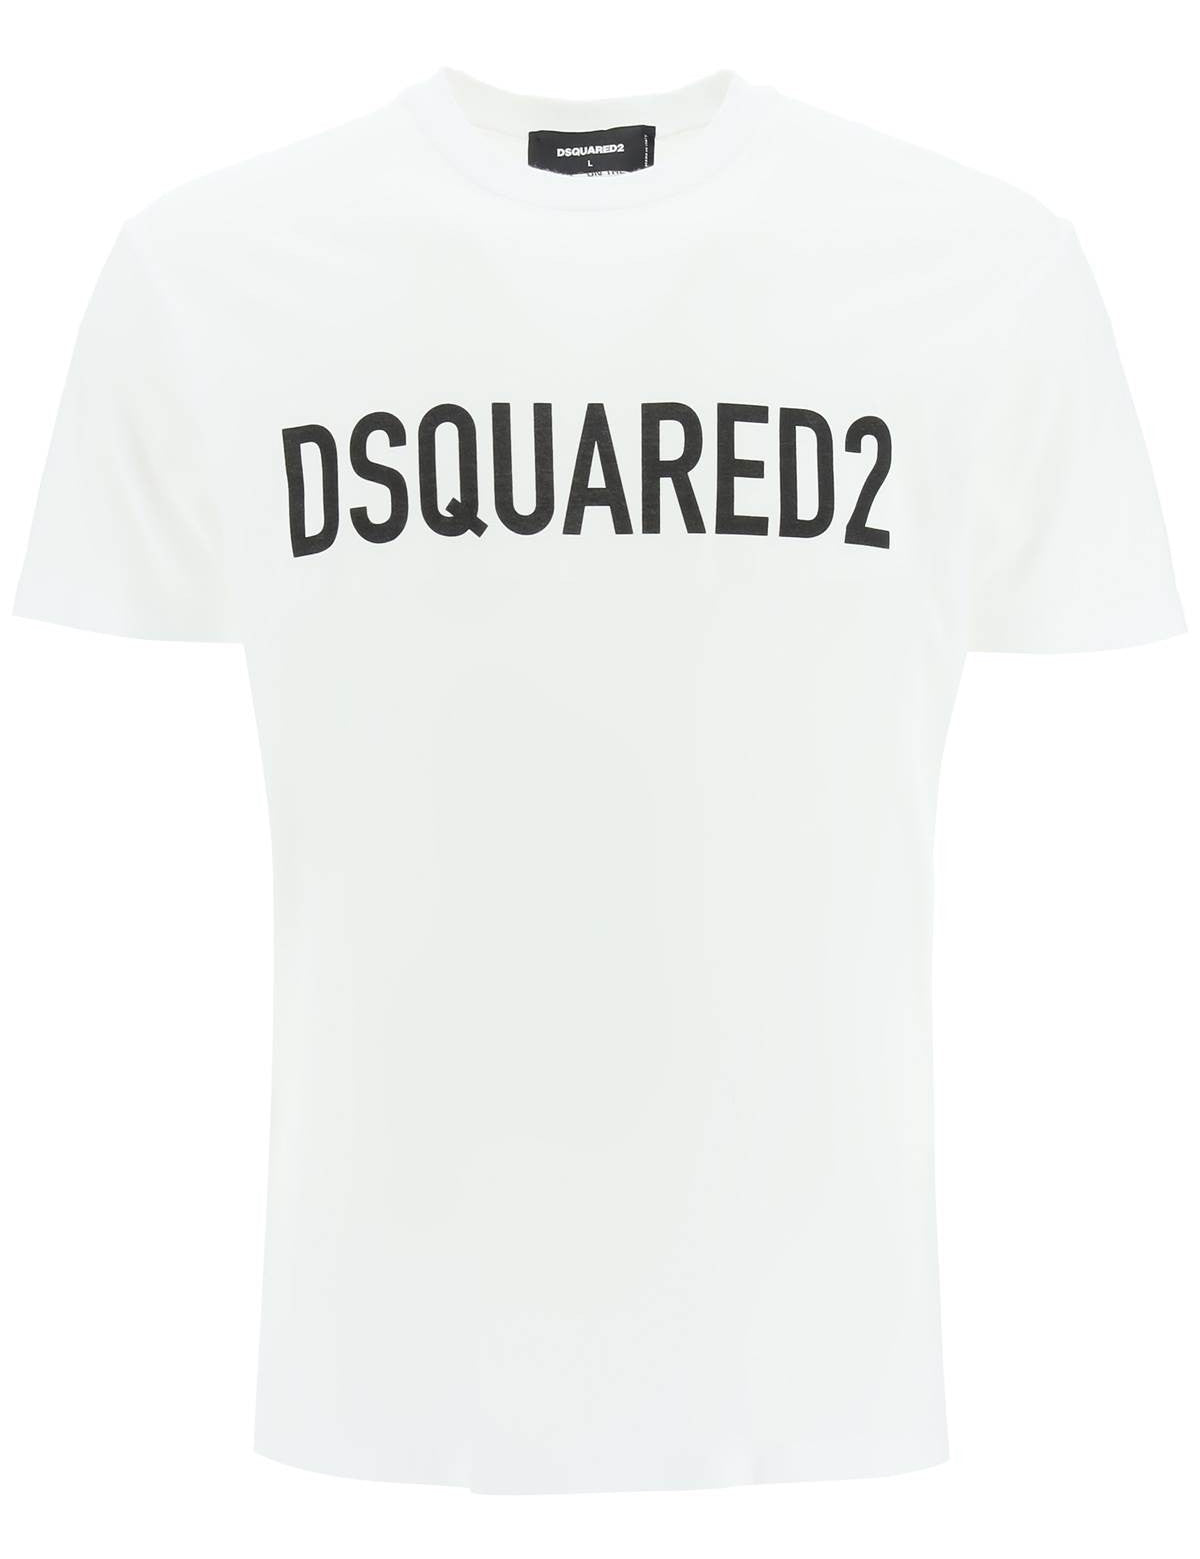 dsquared2-cool-logo-print-t-shirt.jpg